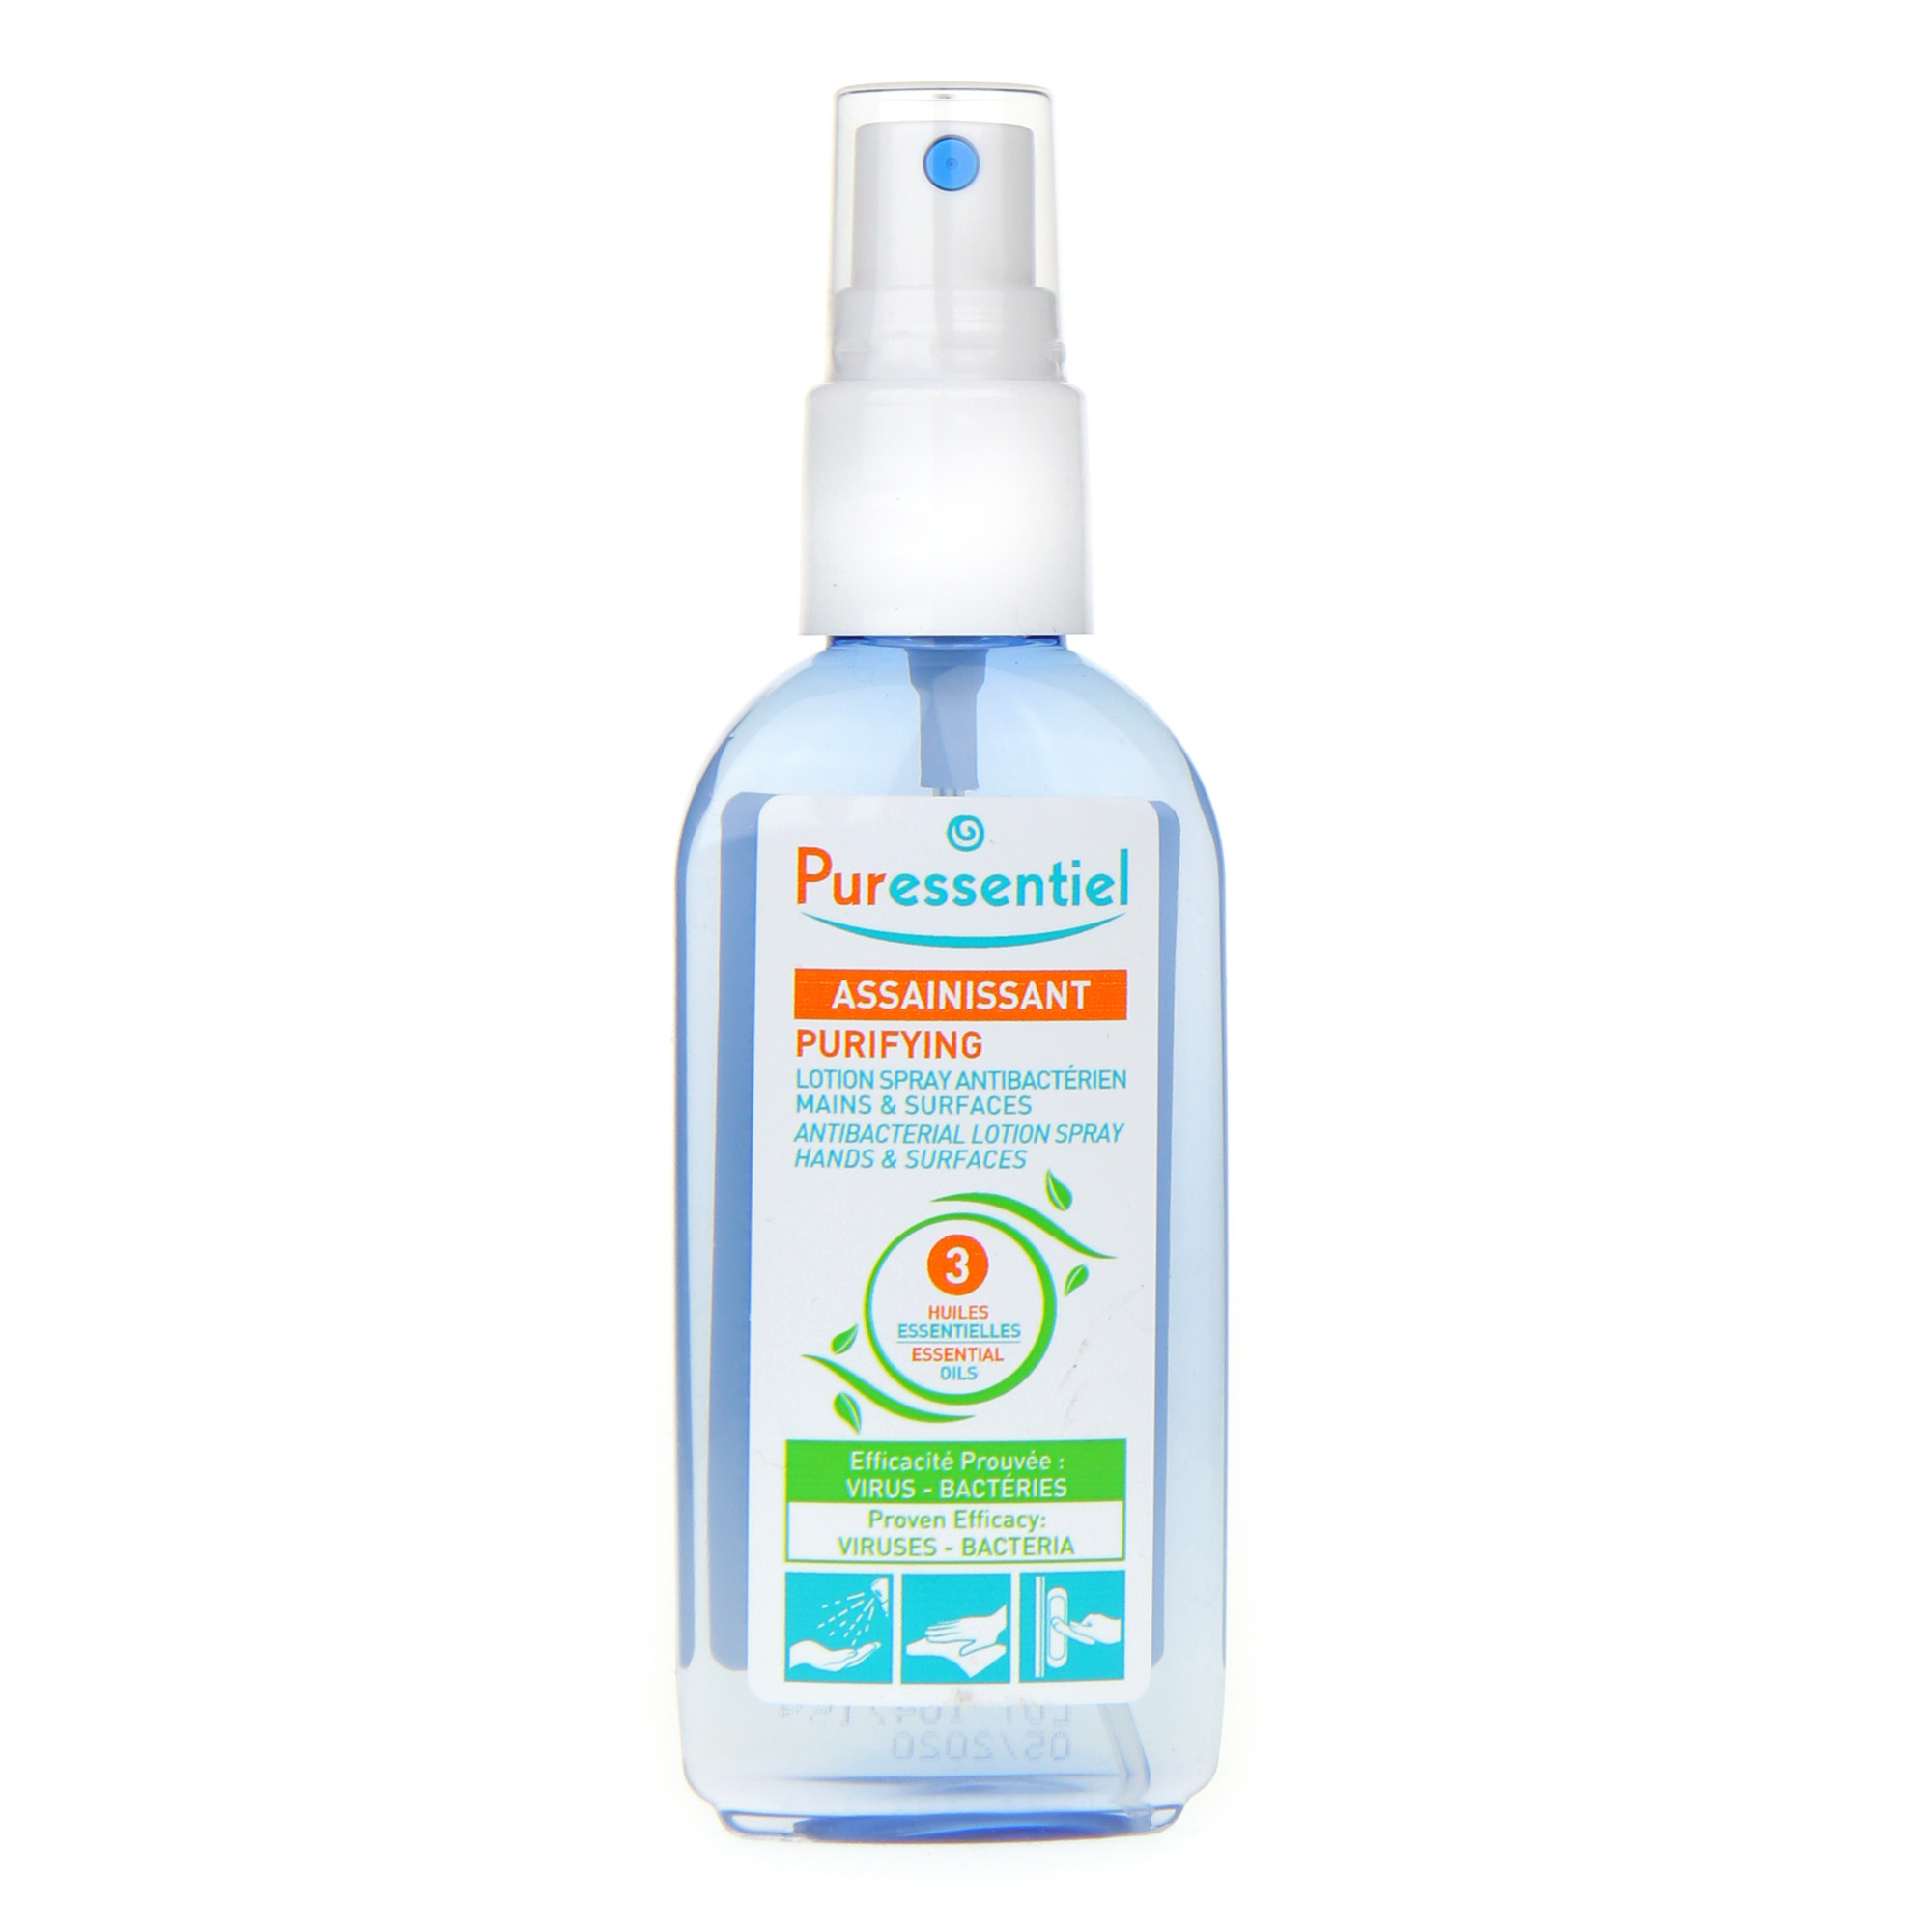 https://www.pharma360.fr/8804/assainissant-lotion-spray-antibacterien-aux-3-huiles-essentielles-80-ml.jpg